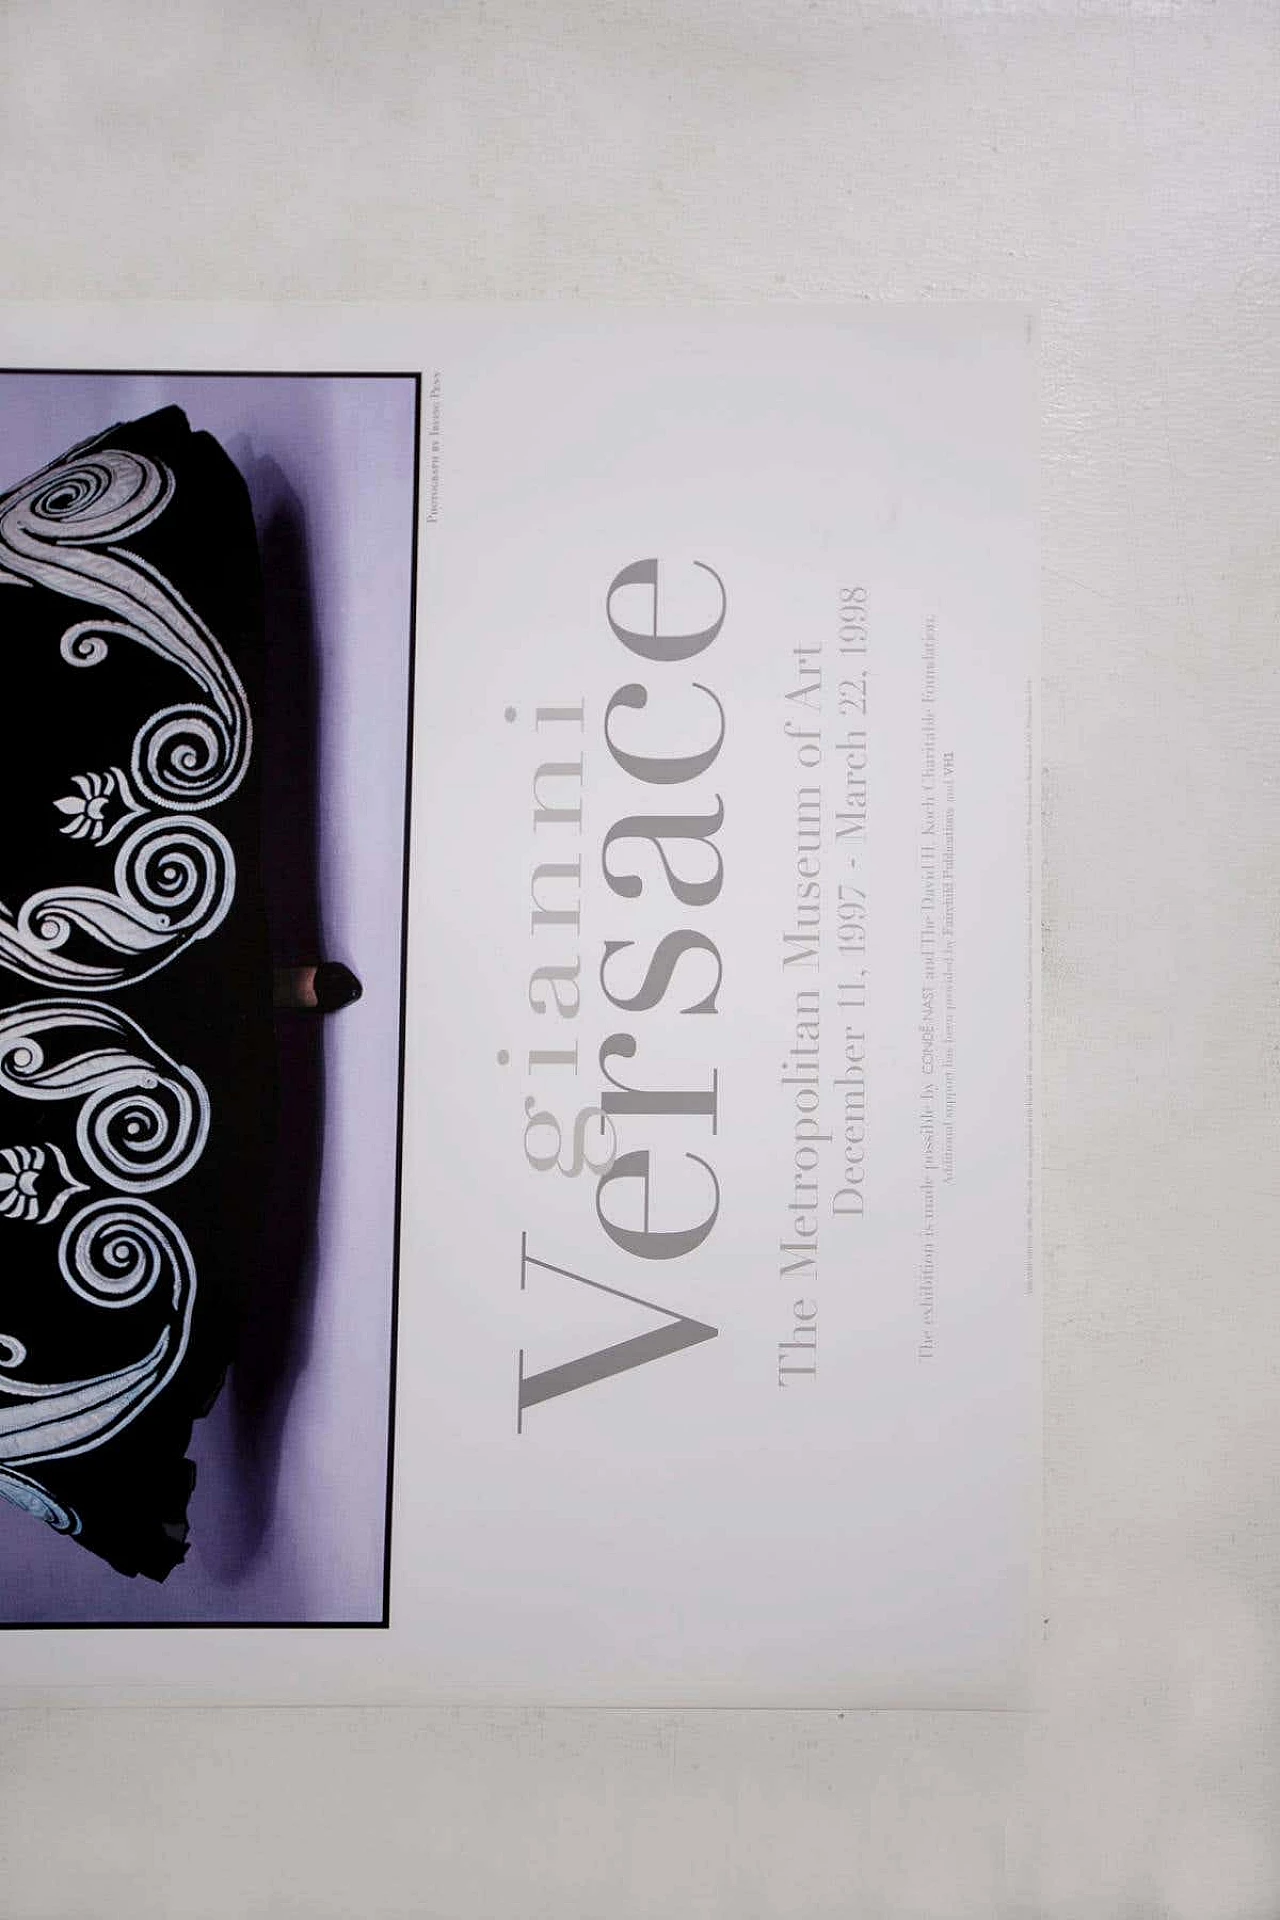 Gianni Versace Metropolitan Museum of Art poster, photo by Irving Penn, 1997 3